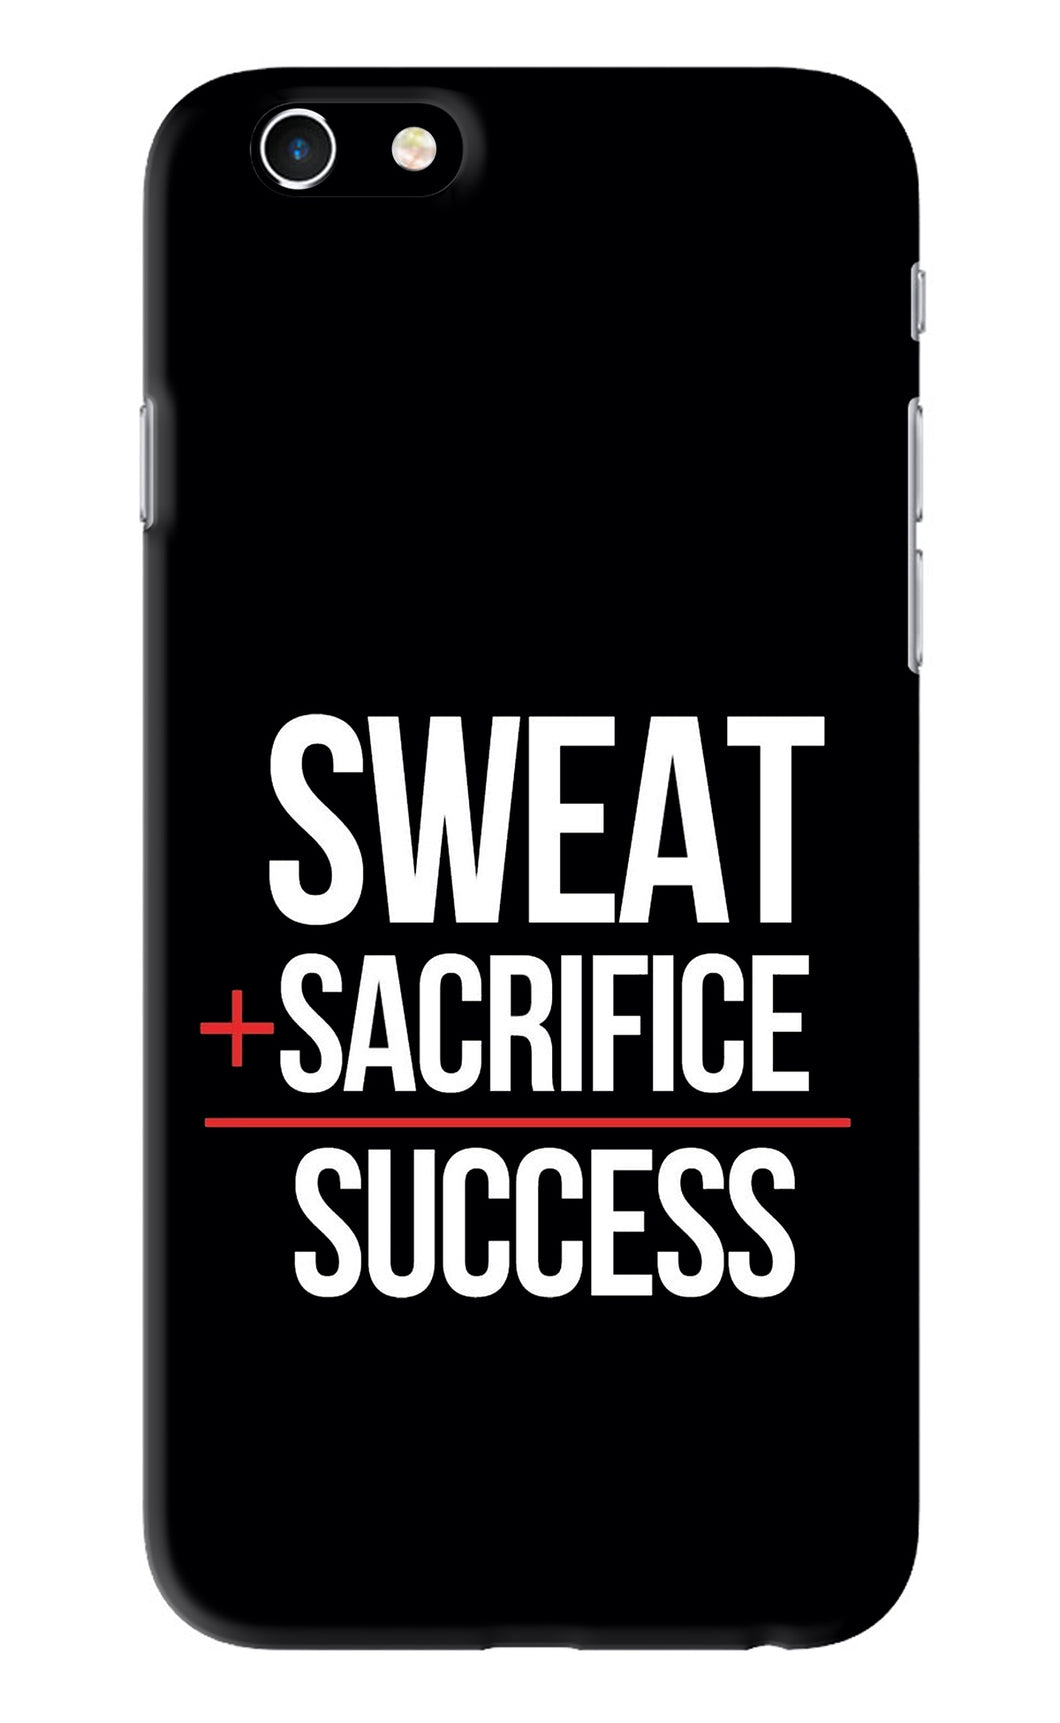 Sweat Sacrifice Success iPhone 6 Back Skin Wrap